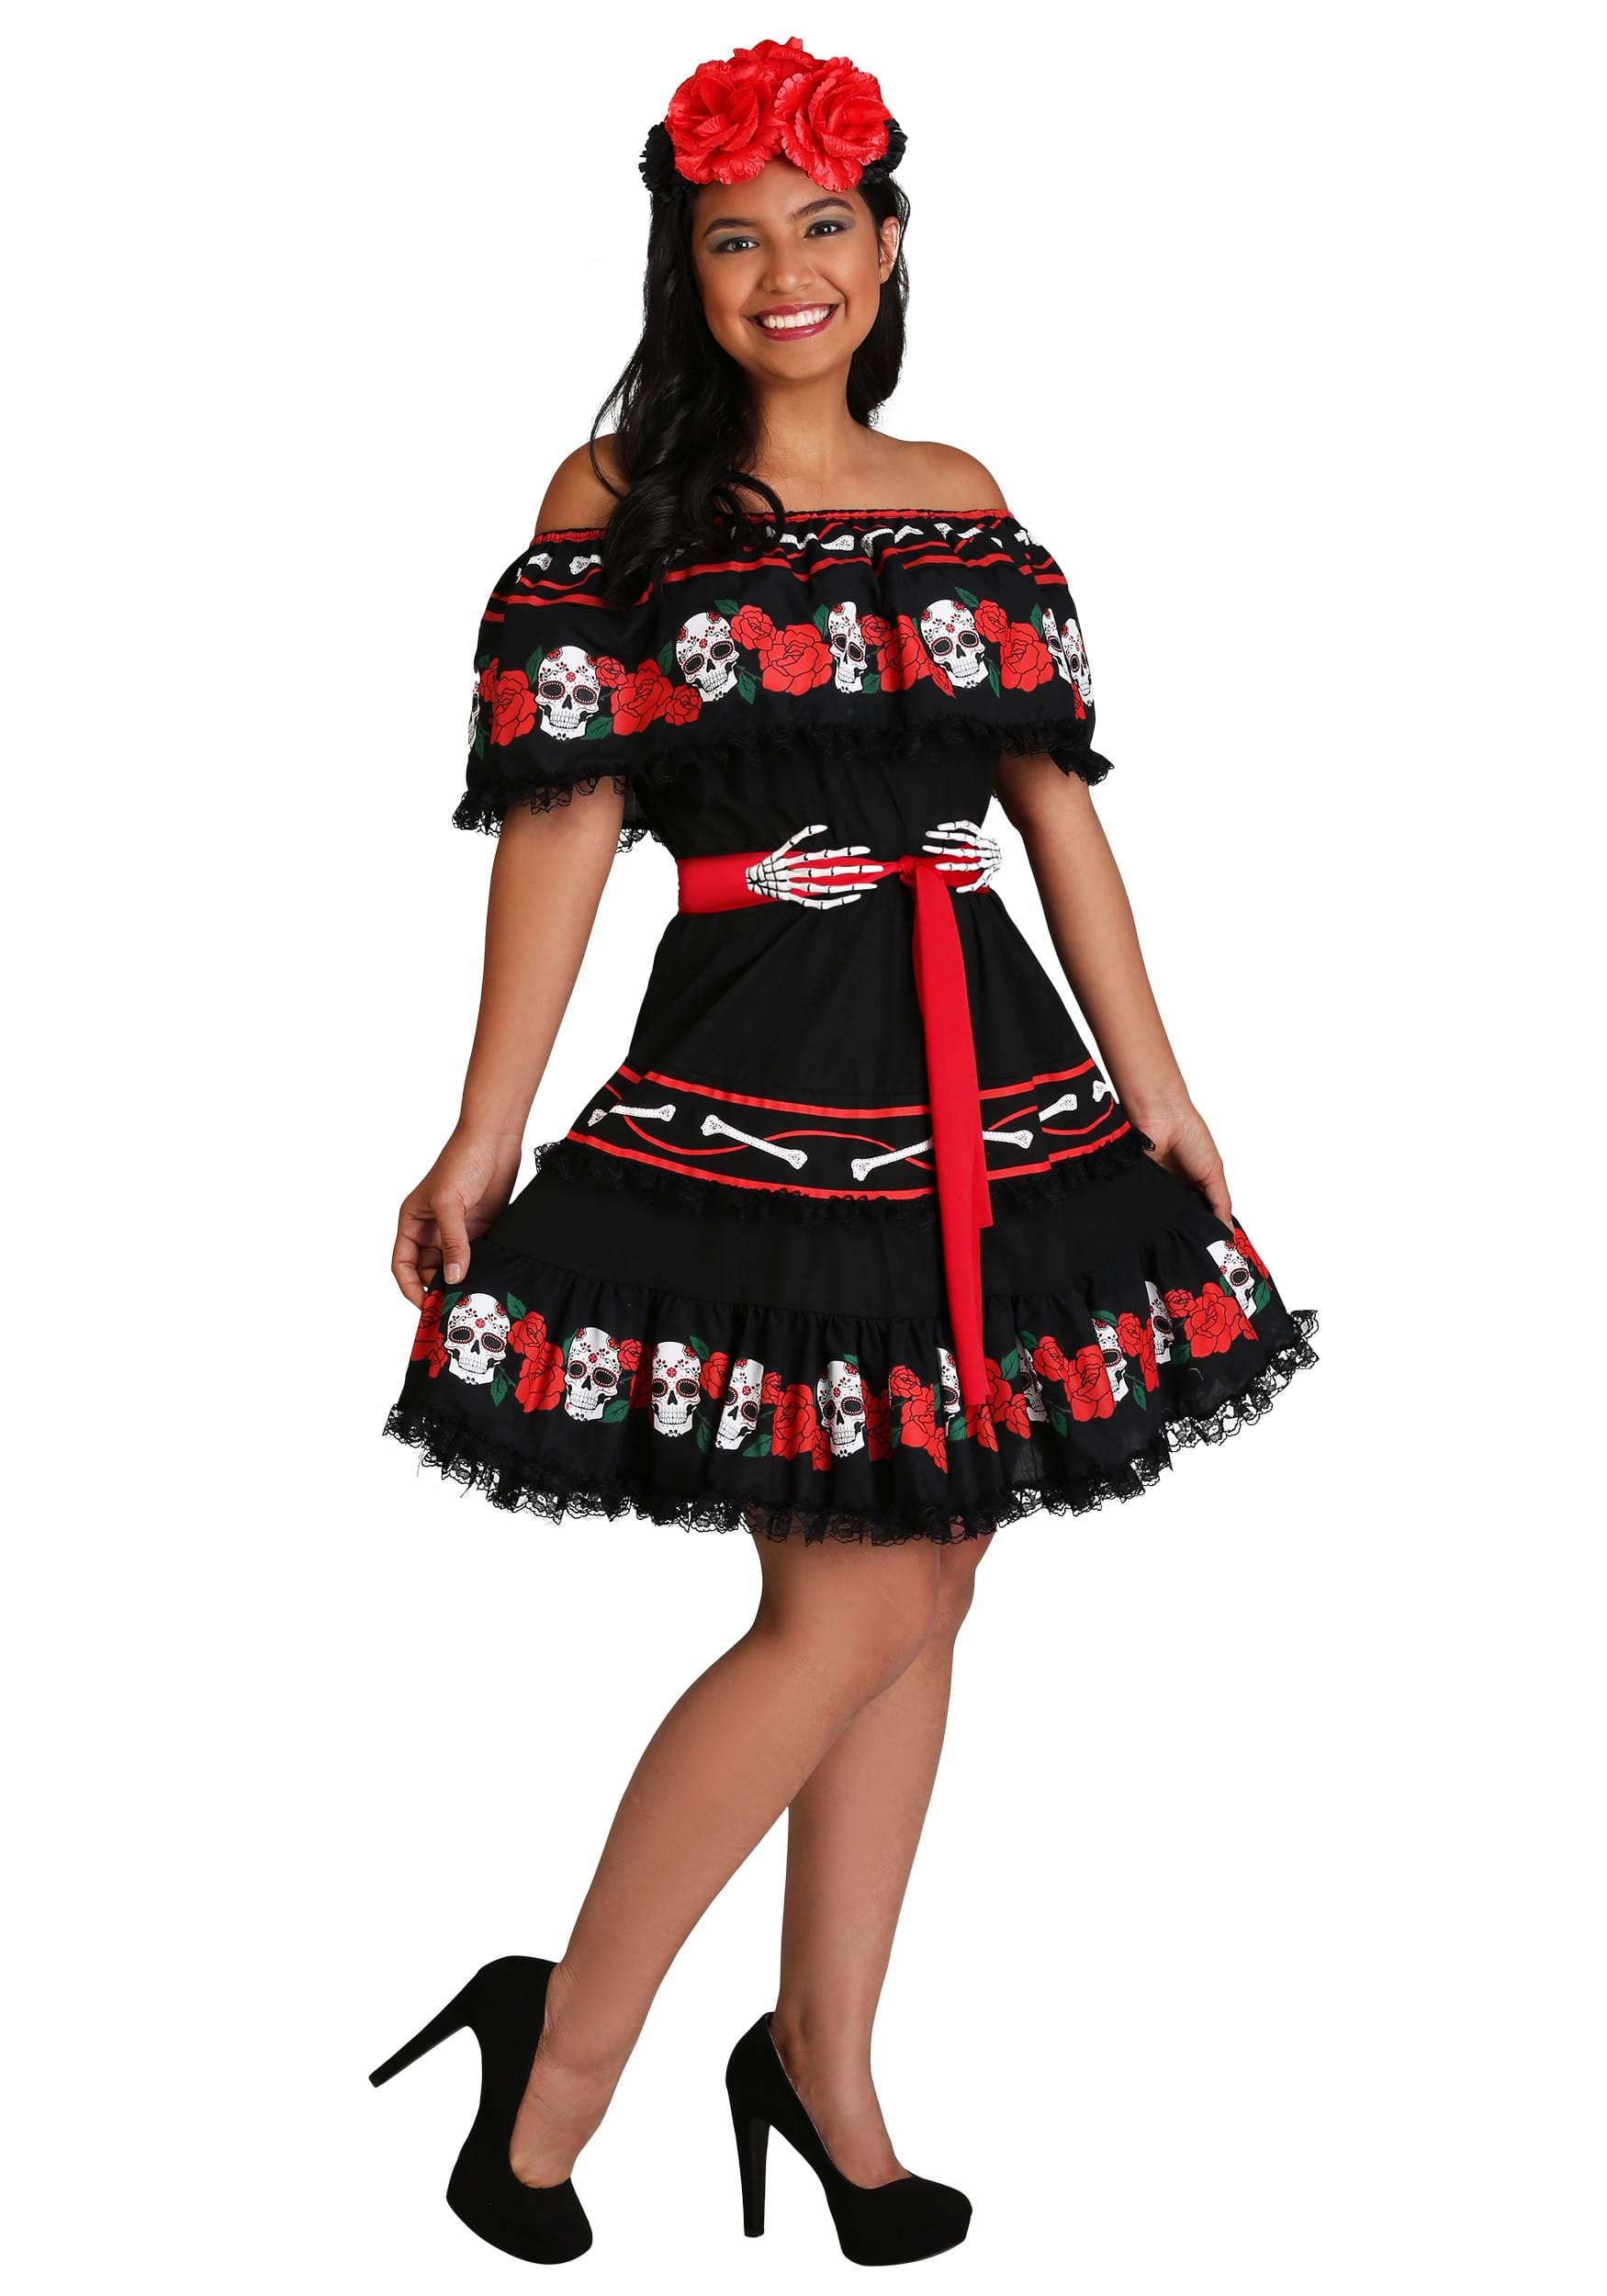 Photos - Fancy Dress Sugar FUN Costumes Women's  Skull Costume Dress Black/Red/White FUN 